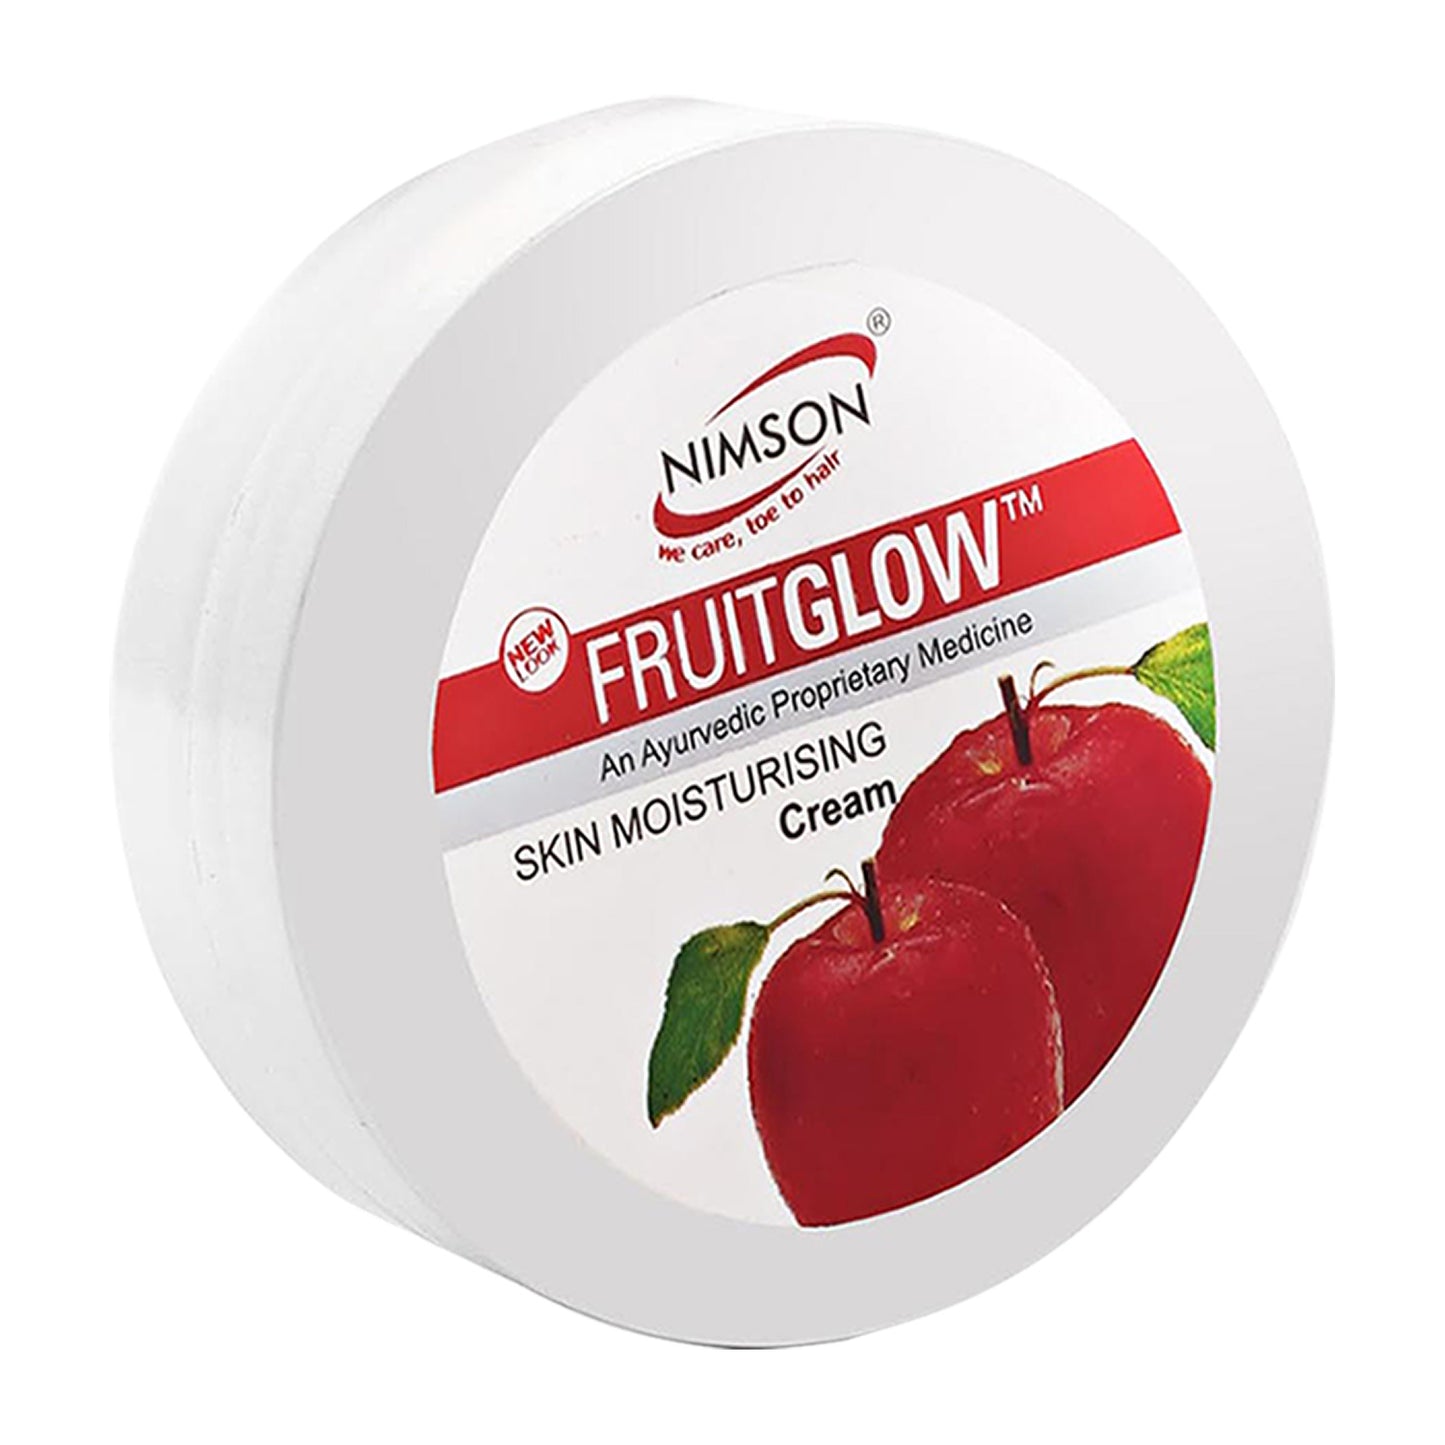 FruitGlow Skin Moisturising Cream